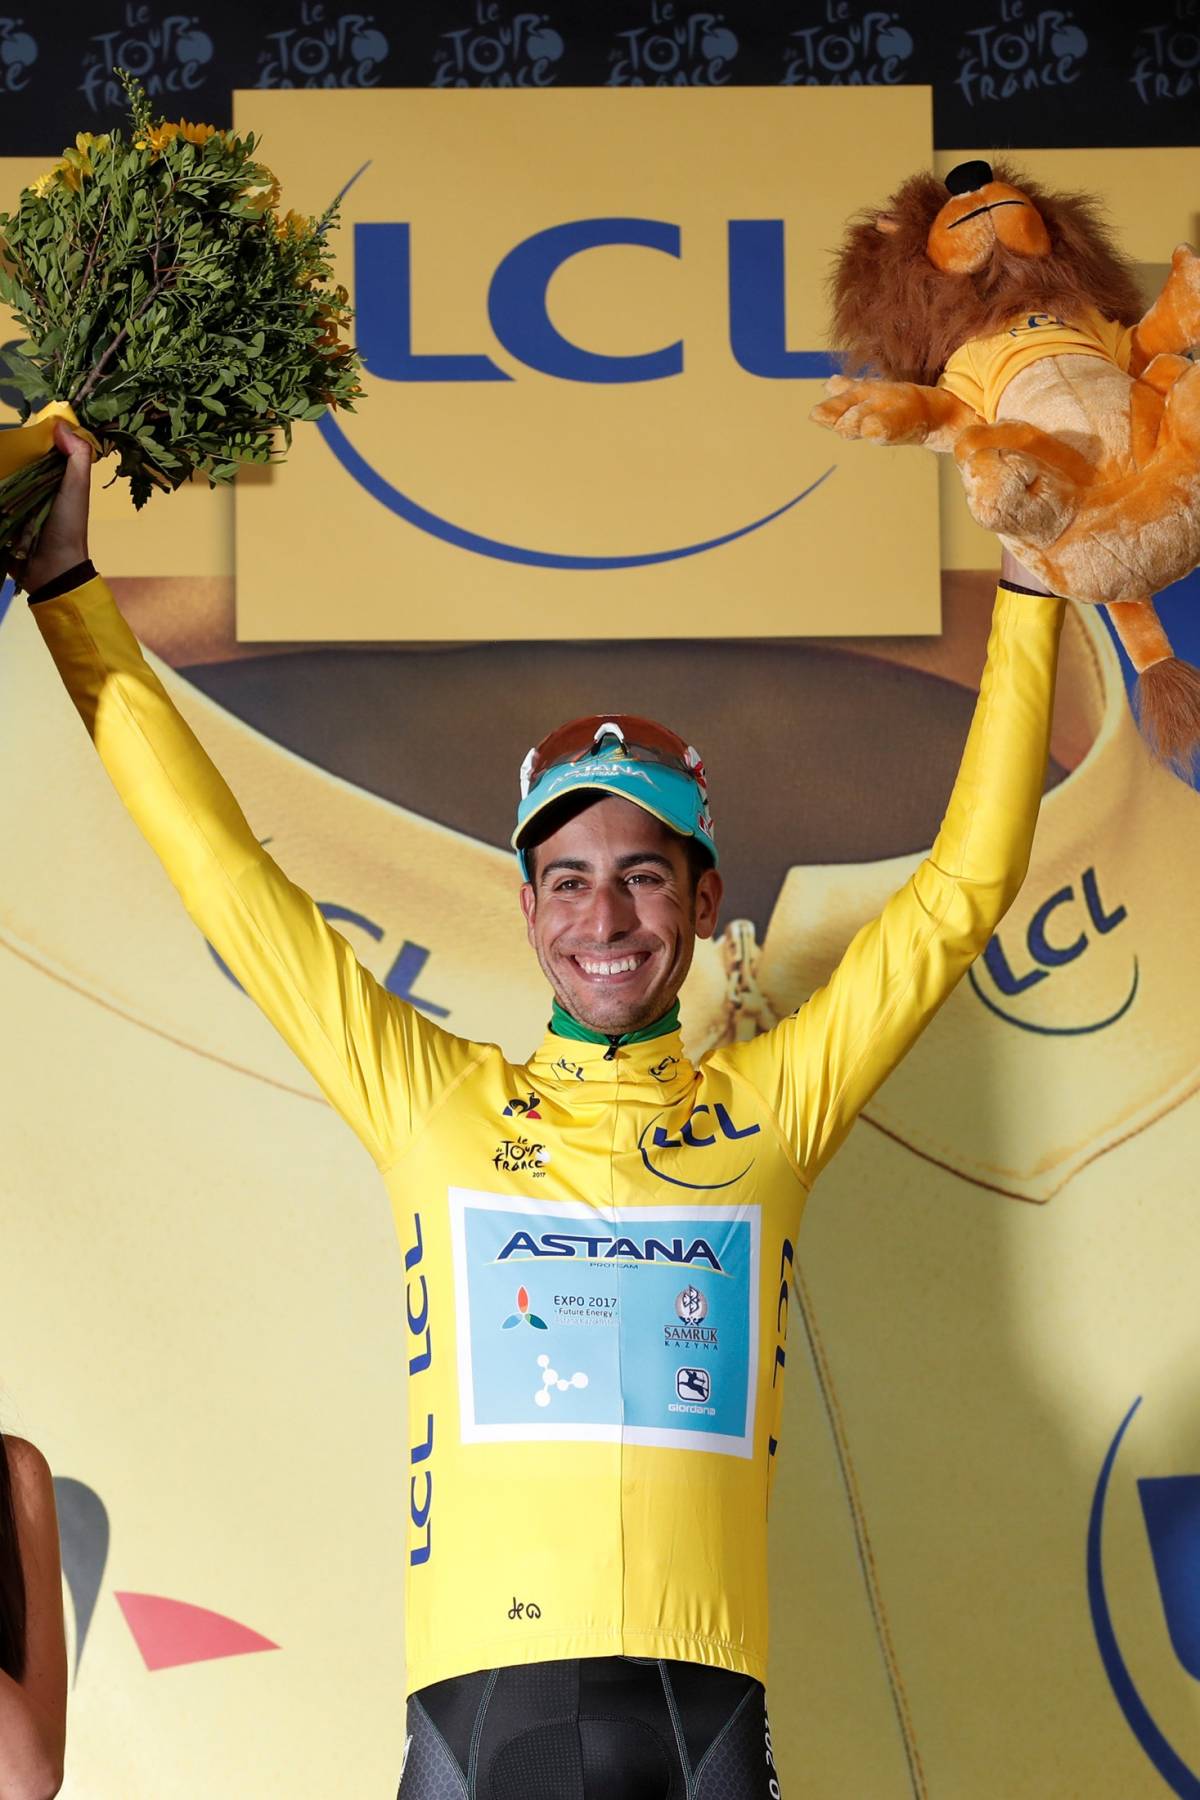 L'Astana conferma: "Aru correrà la Vuelta"